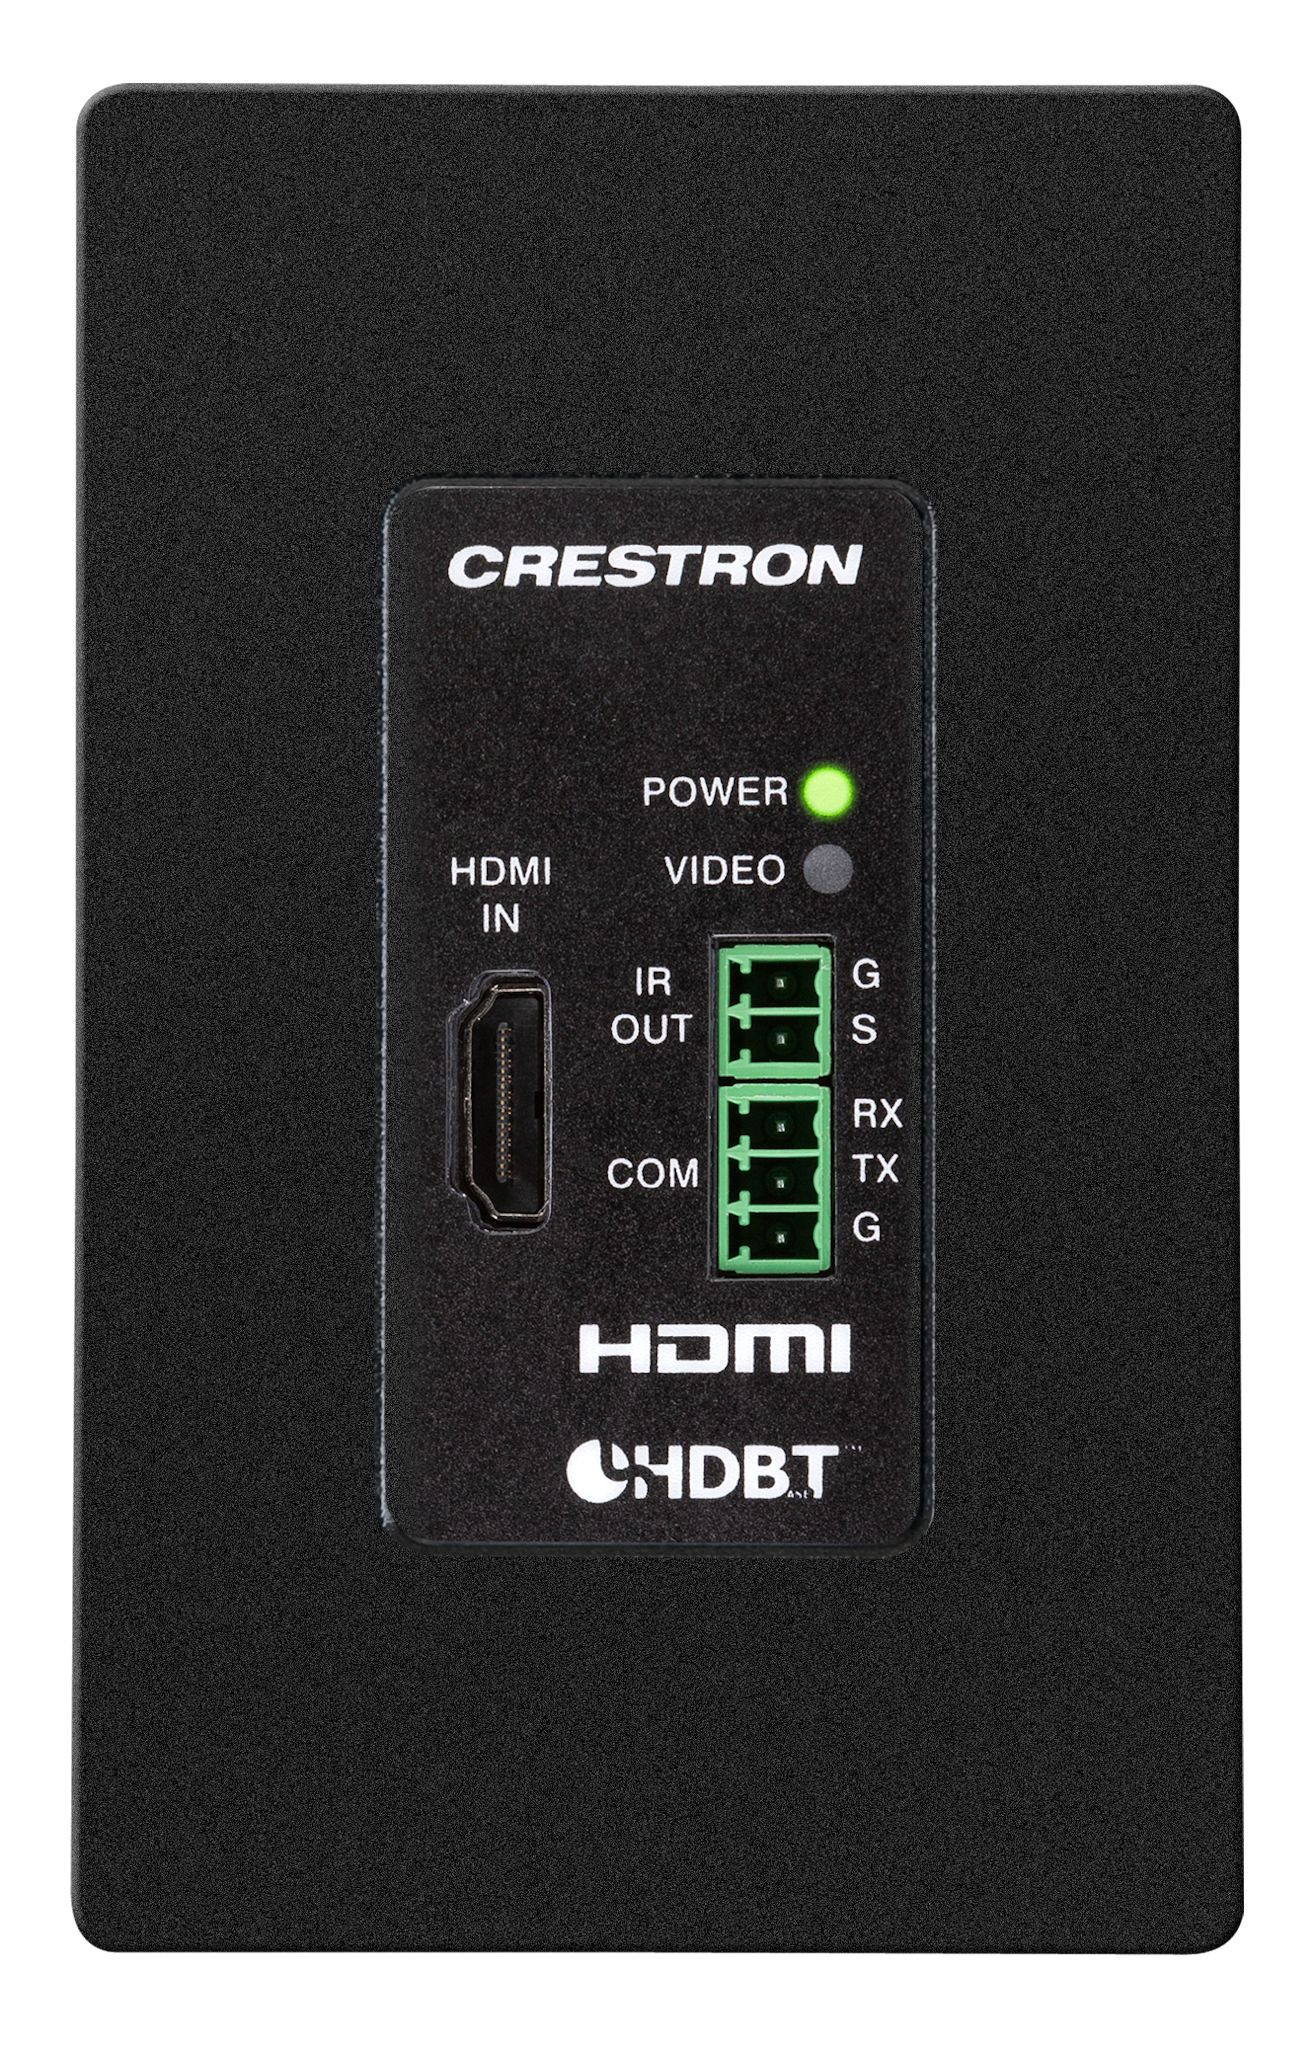 Crestron-DM-TX-4KZ-100-C-1G-B-T-4K60-4-4-4-HDR-Wandplattensender-Demoware